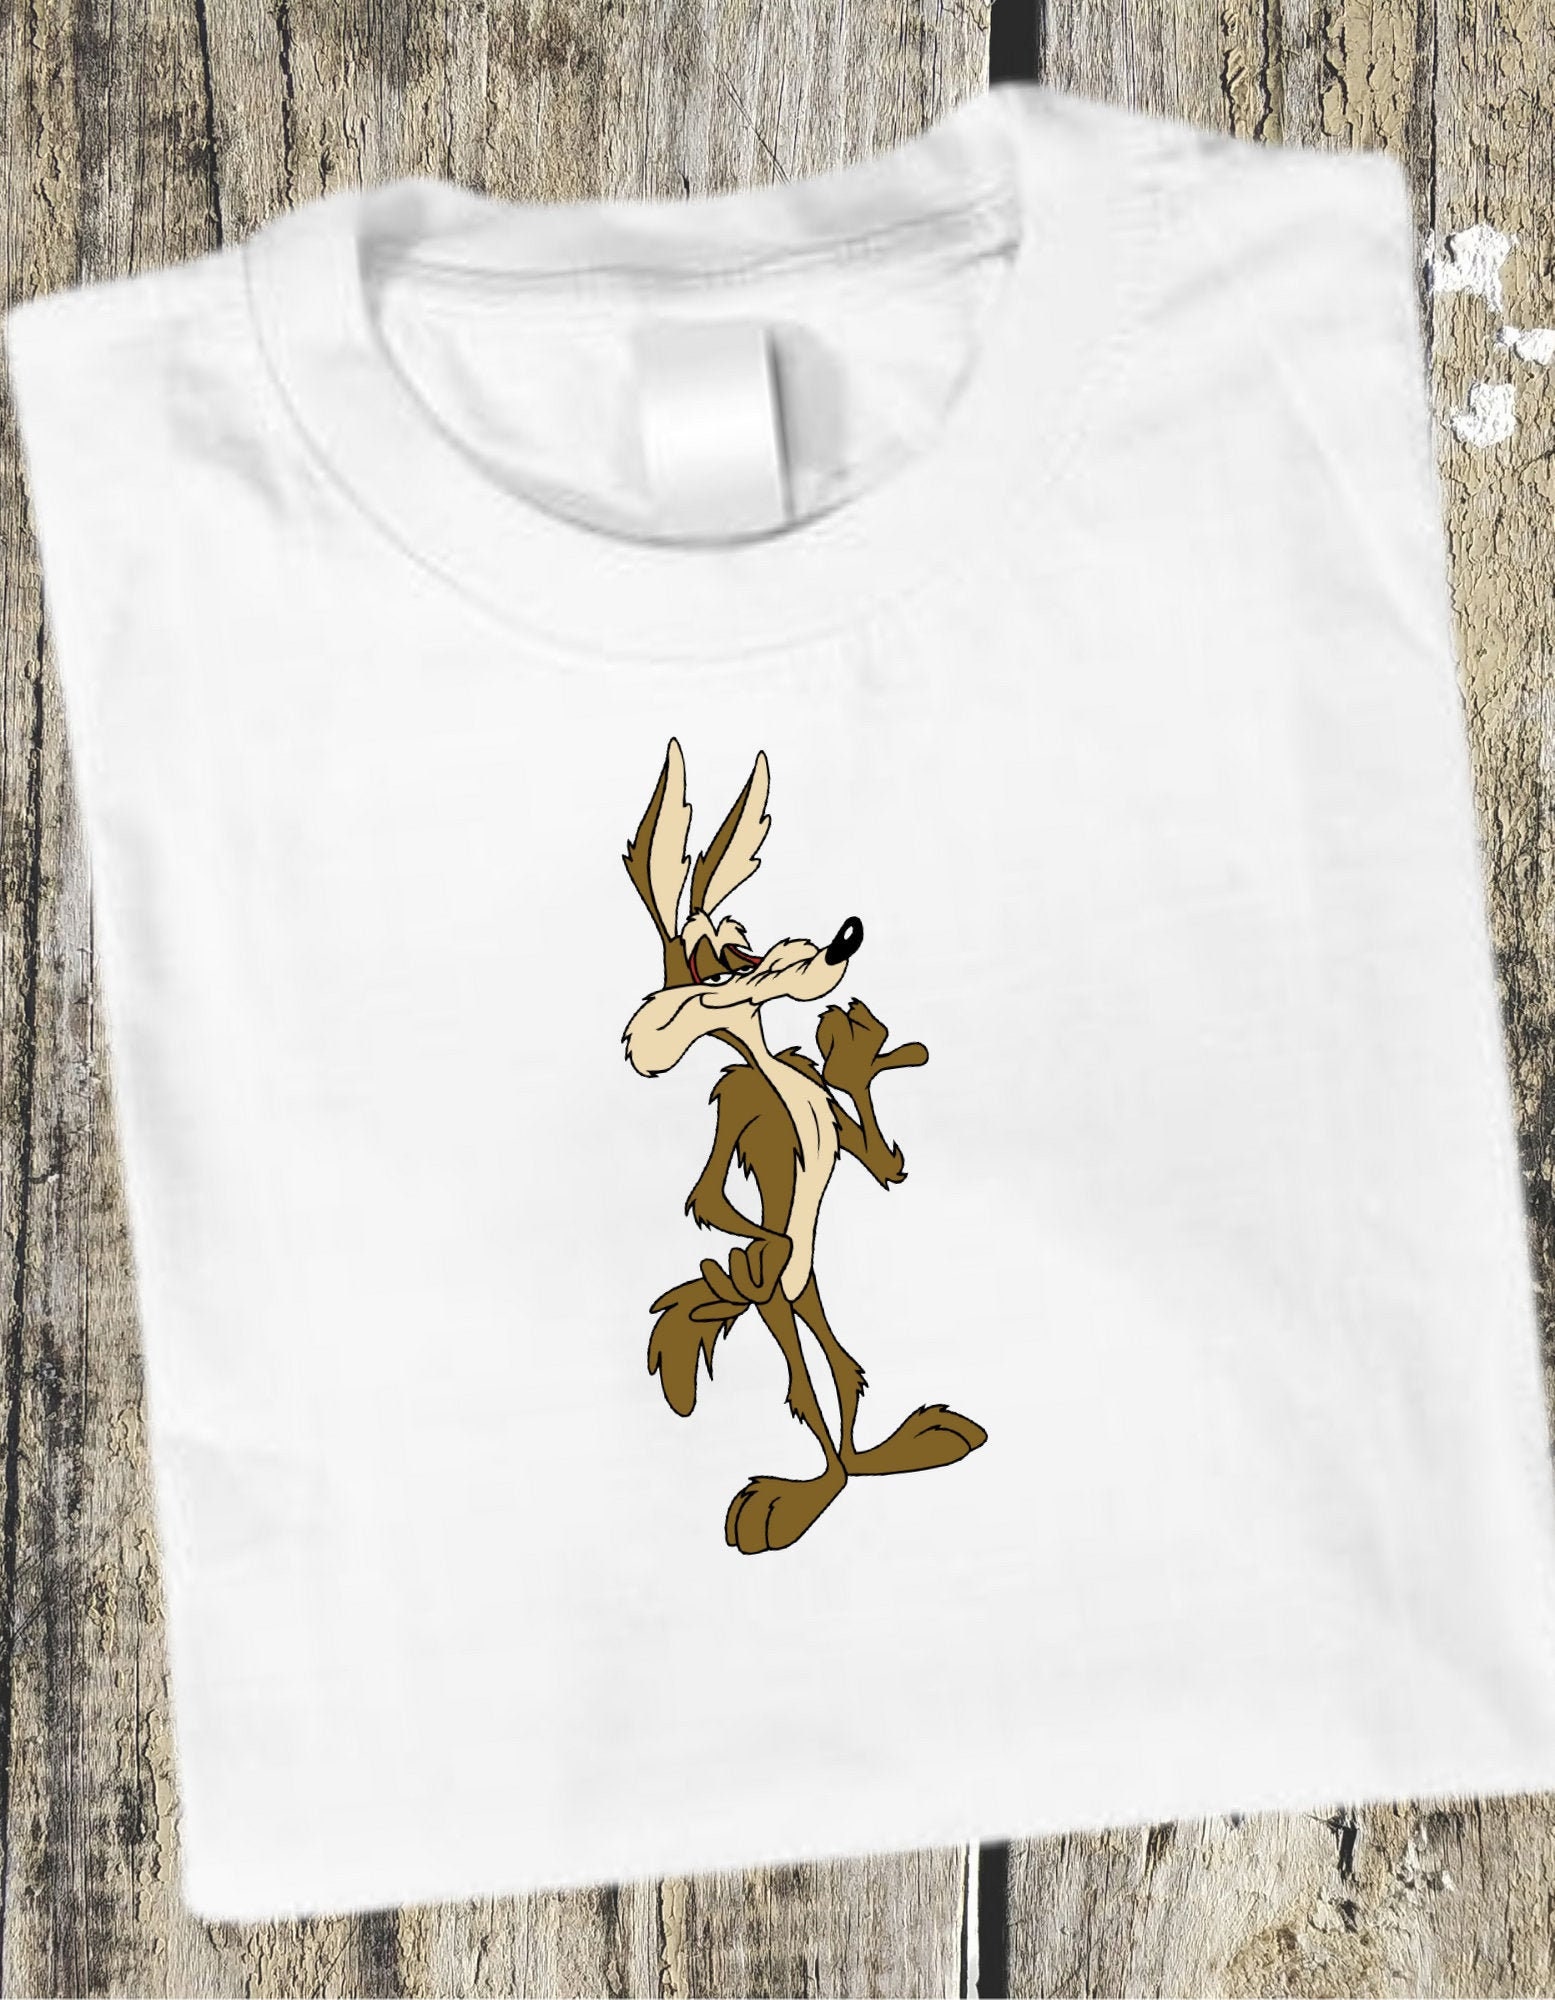 Kleding Gender-neutrale kleding volwassenen Tops & T-shirts T-shirts T-shirts met print Vintage jaren 1990 Wile E Coyote Roadrunner Looney Tunes Signal Single Stitch T-shirt 